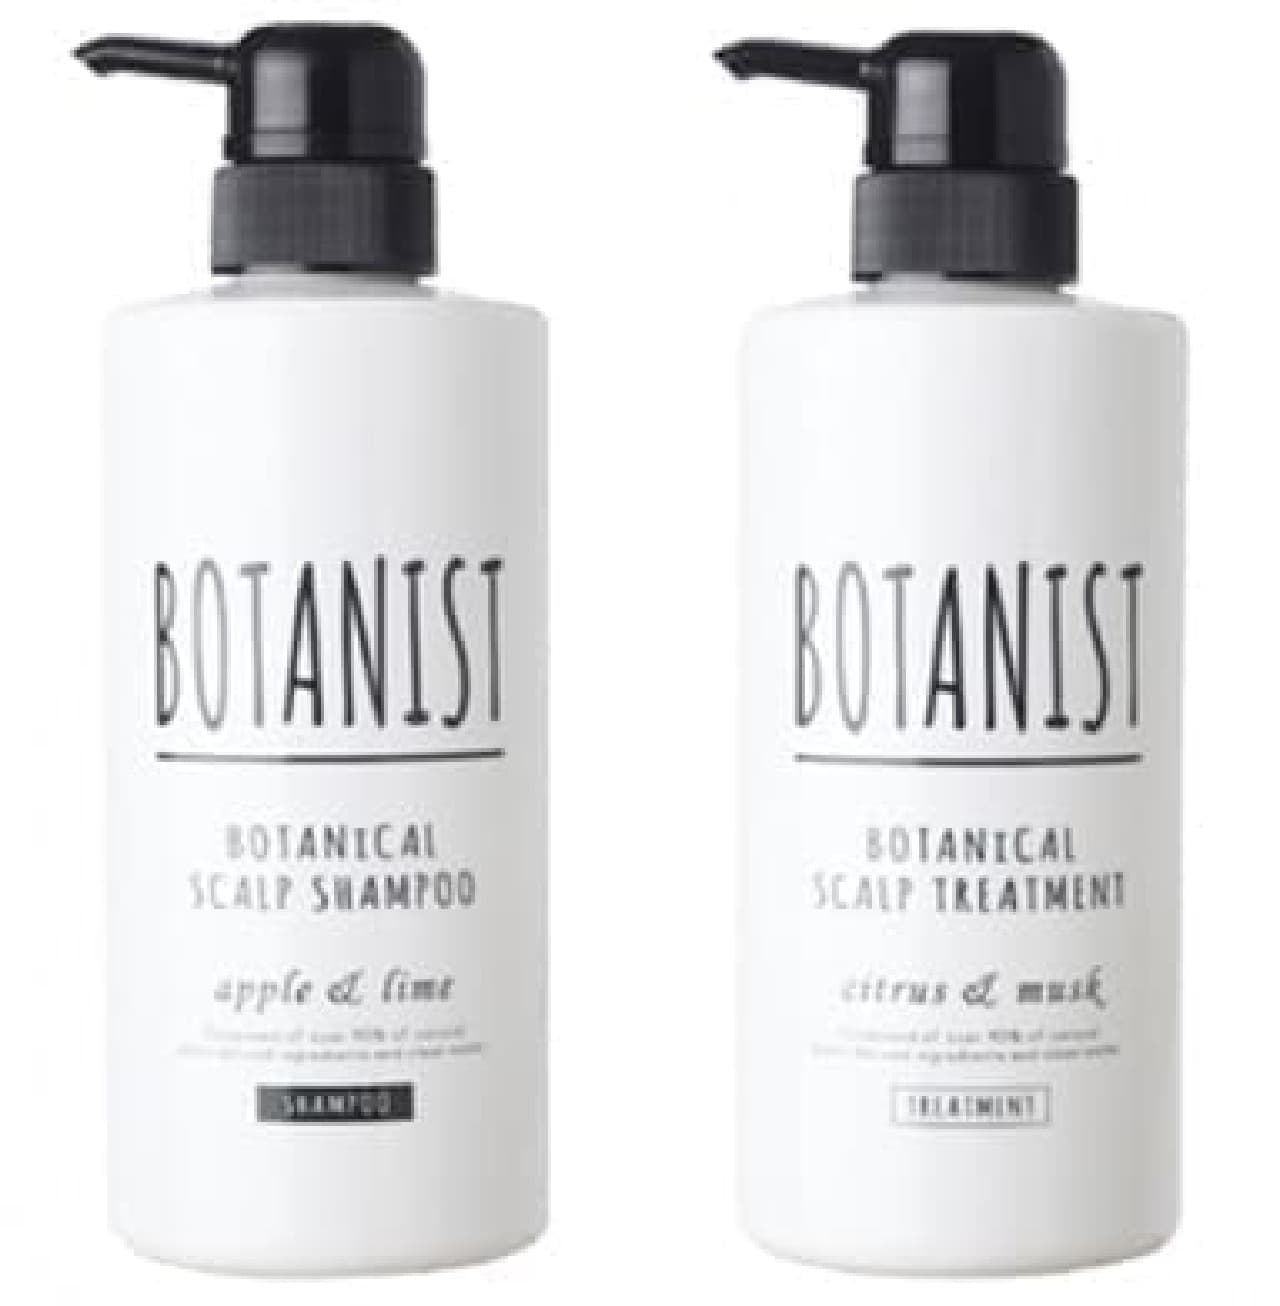 BOTANIST "Botanical Scalp Shampoo & Treatment"